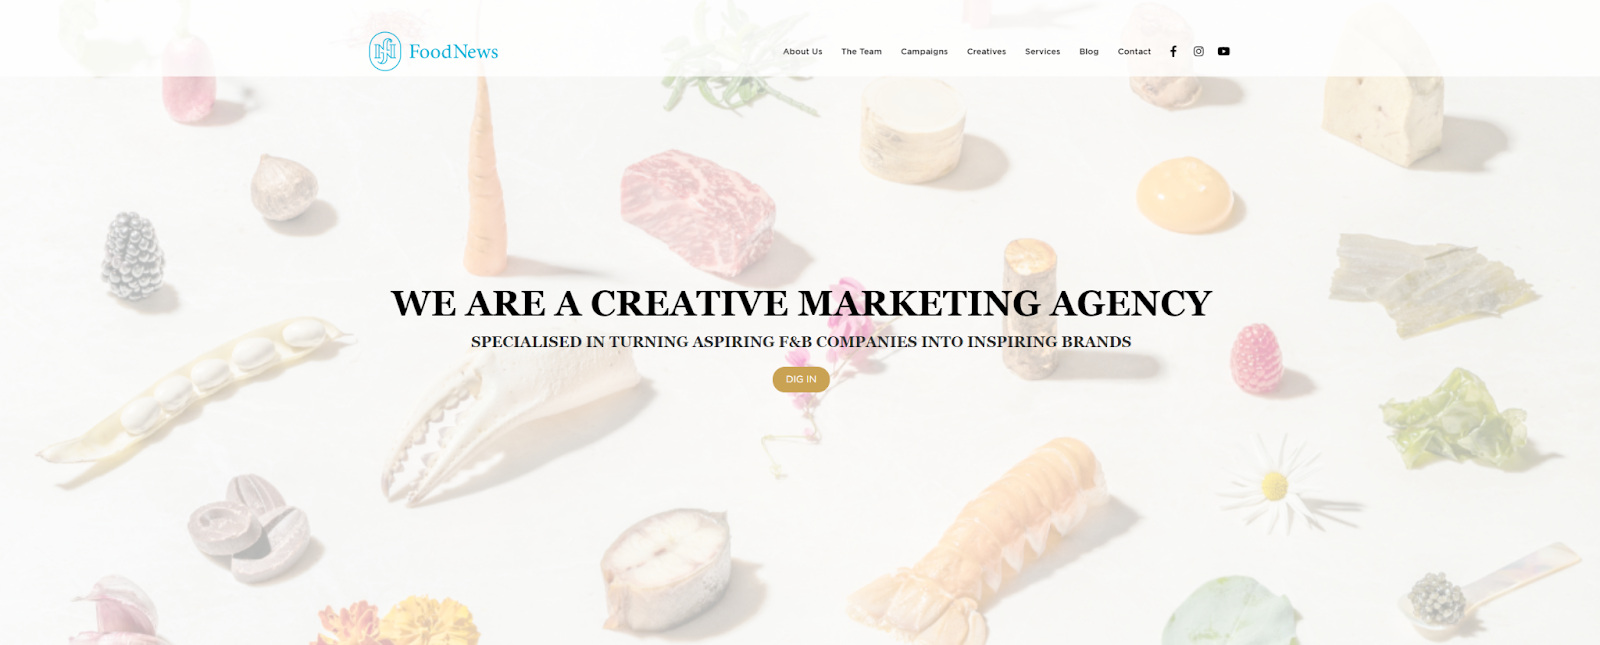 Food marketing agency - Food news